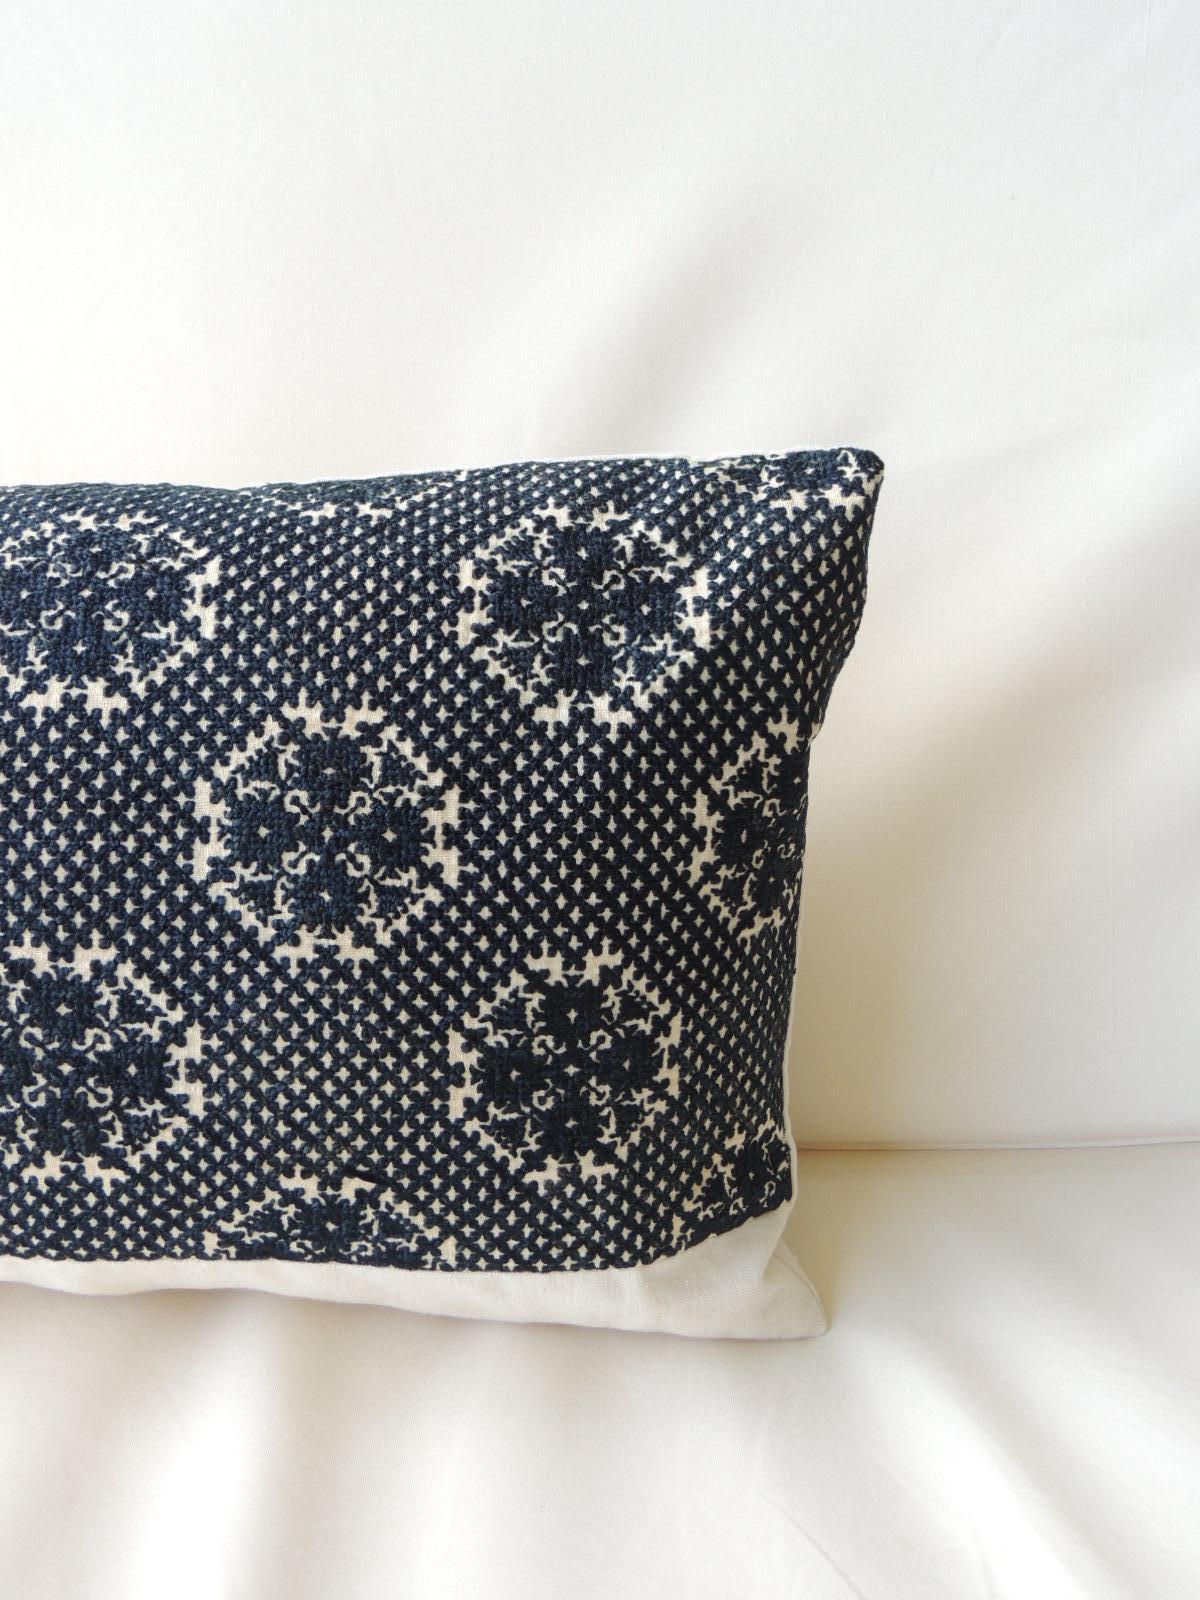 Moorish Dark Indigo Embroidery Fez Antique Textile Bolster Decorative Pillow